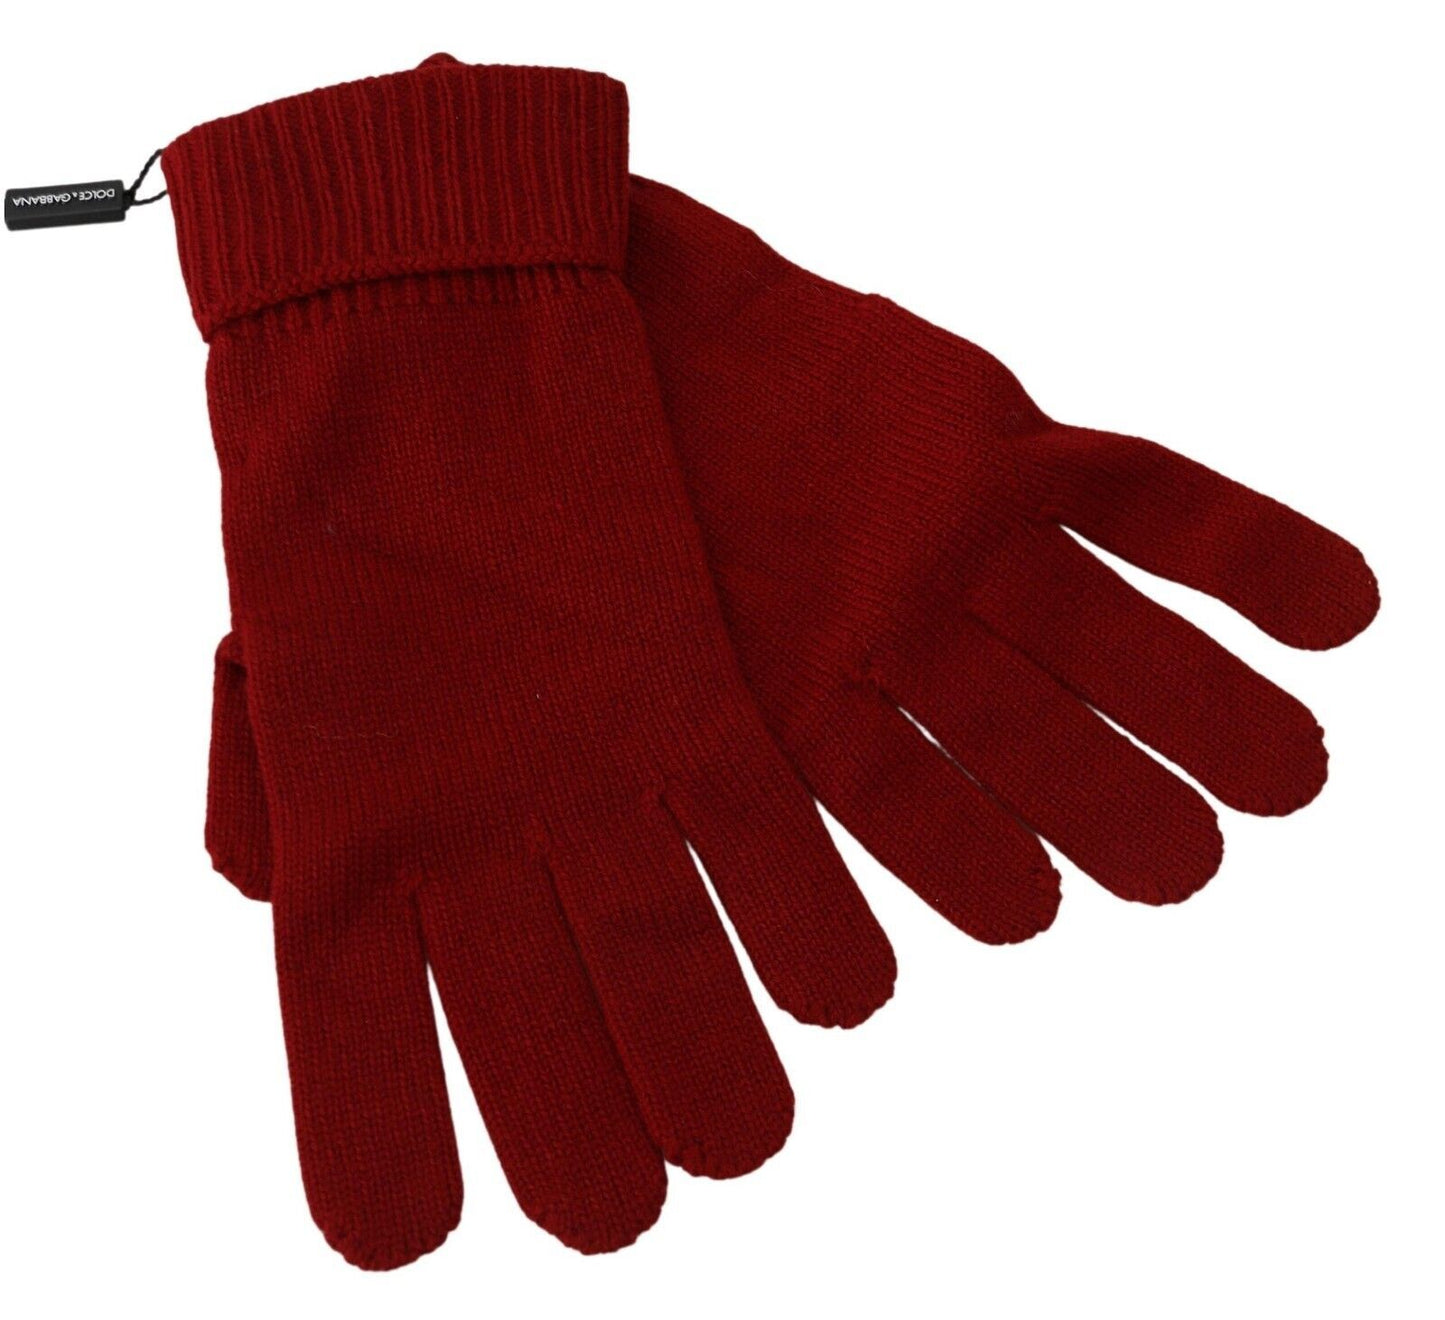 Red 100% Cashmere Knit Hands Mitten Mens Gloves